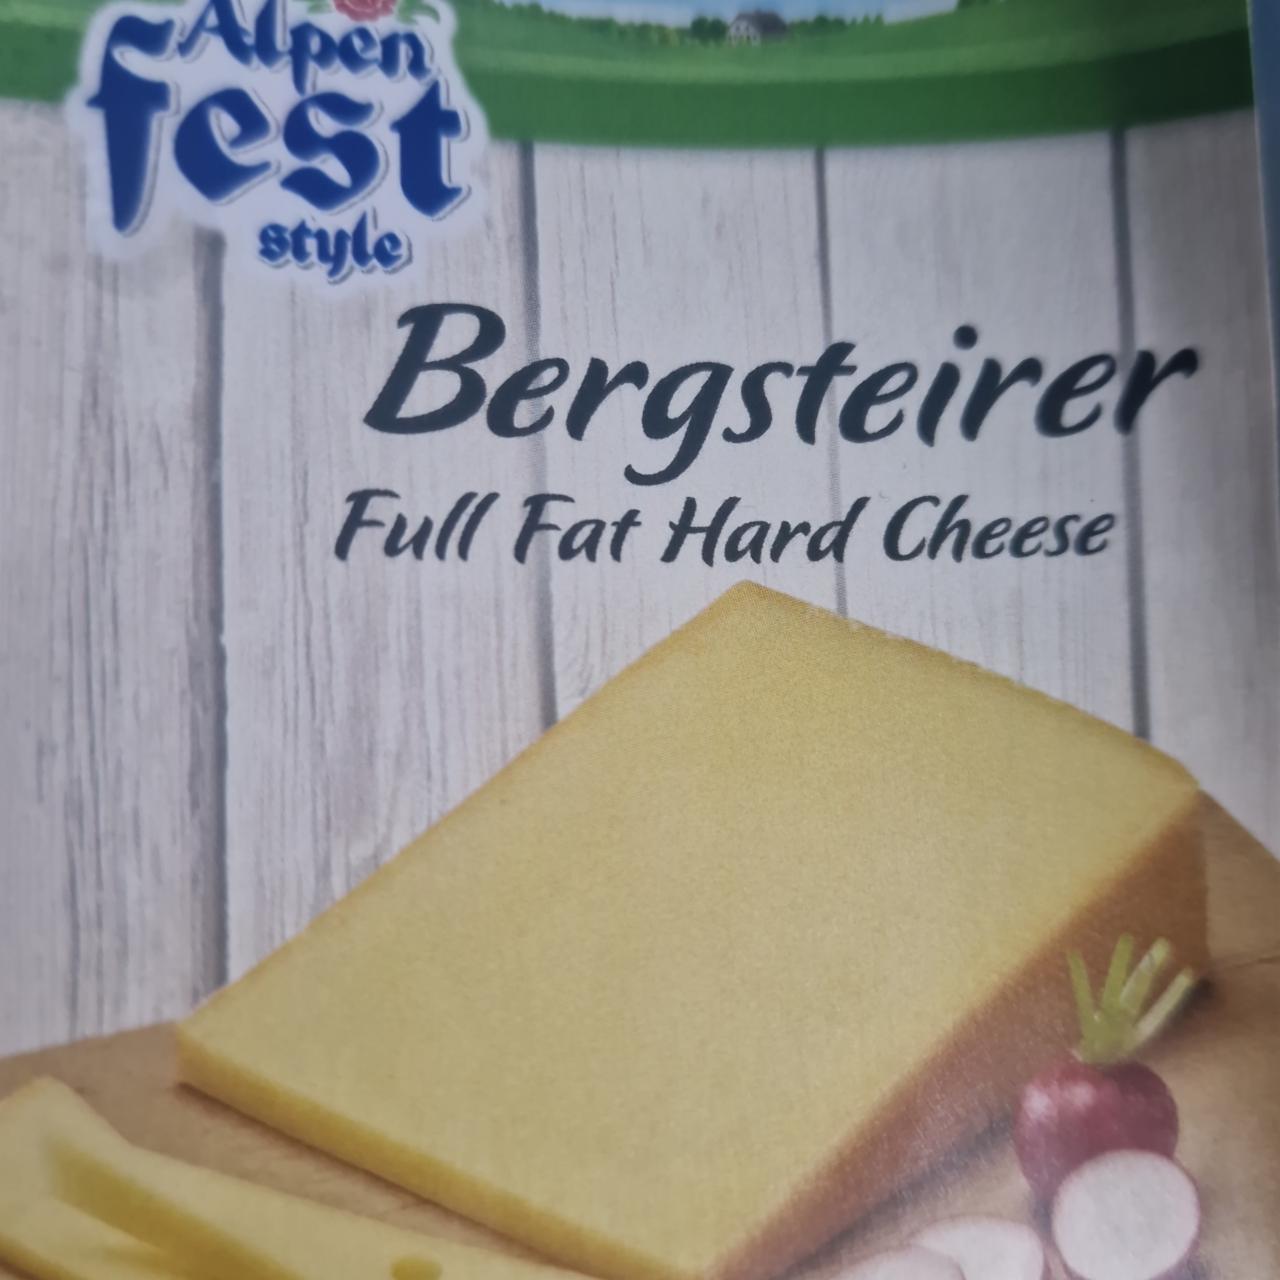 Фото - Bergsteirer Full Fat Hard Cheese Alpen fest style